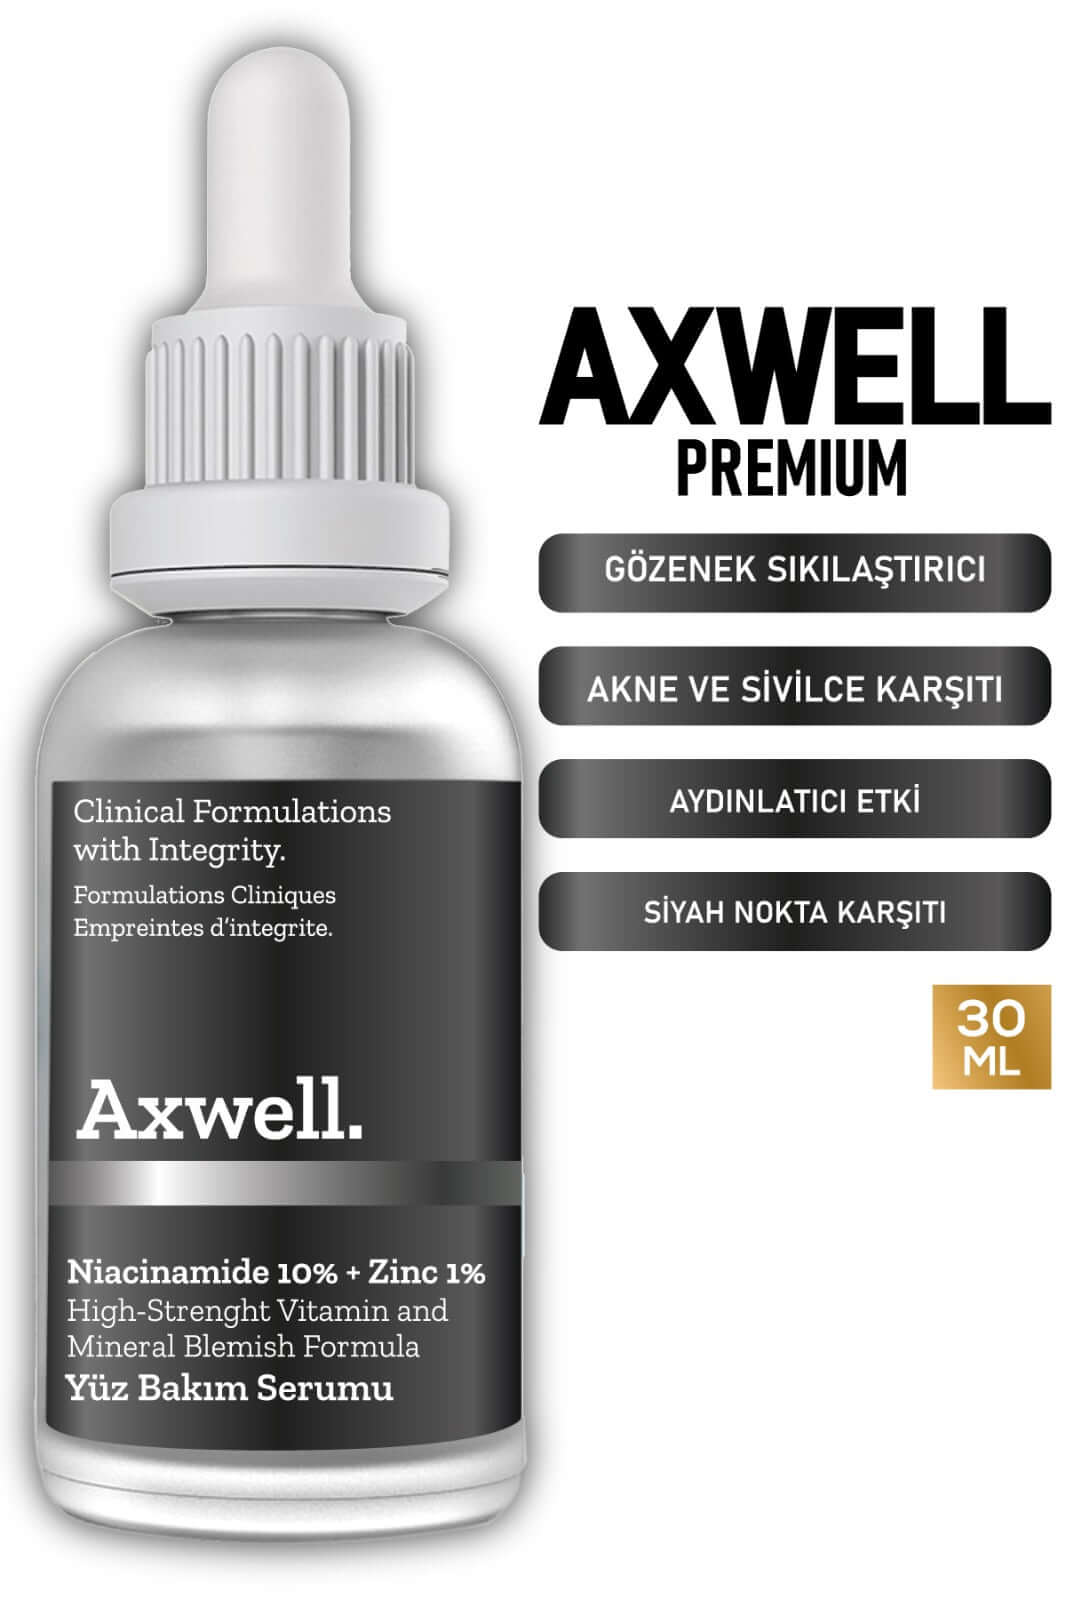 Axwell Niacinamide 10% + Zinc 1% 30 ml Leke Giderici Yüz Bakım Serumu